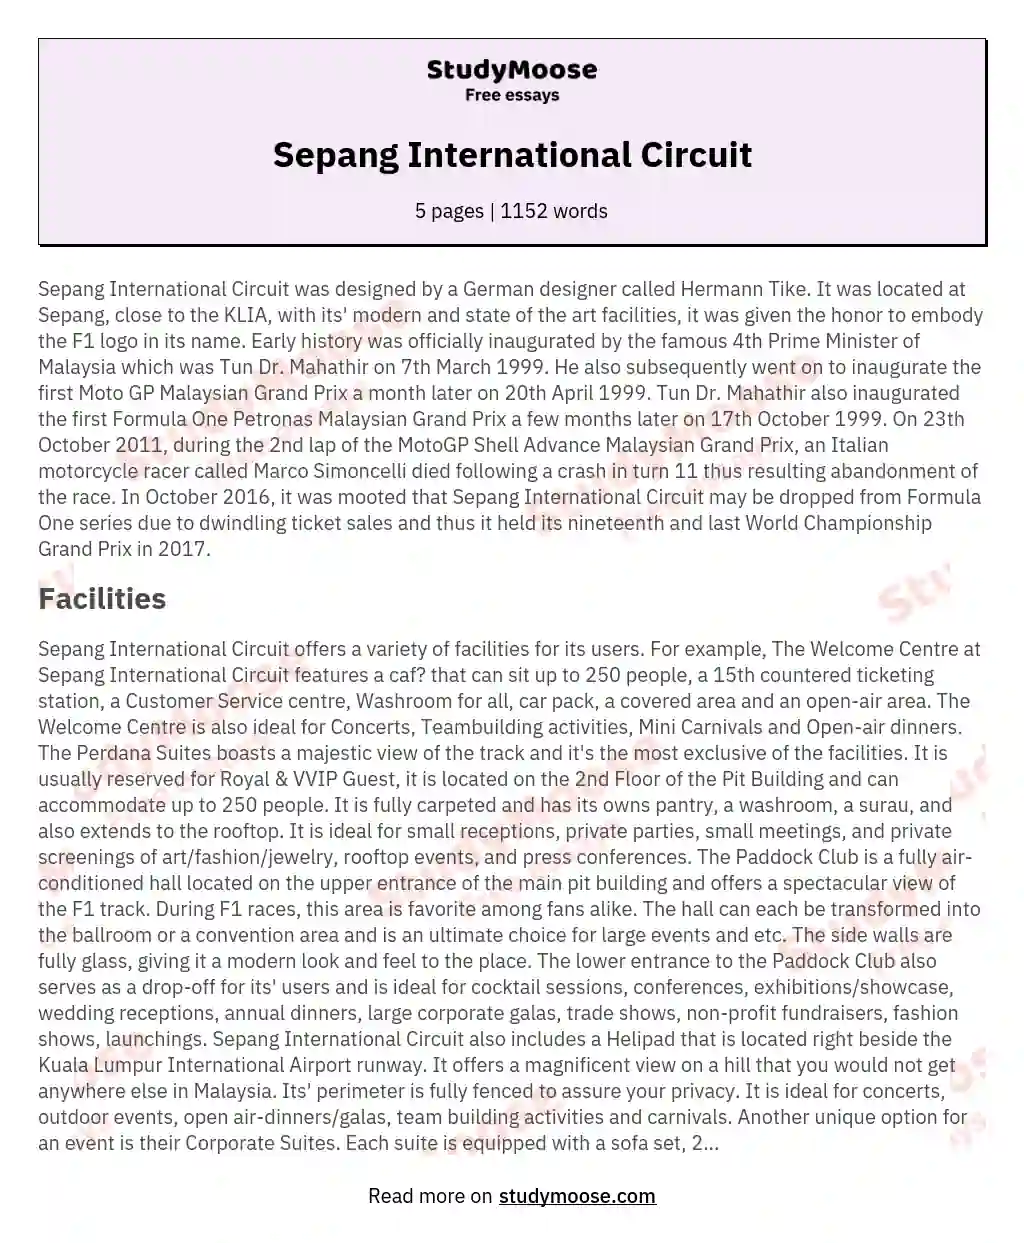 Sepang International Circuit essay